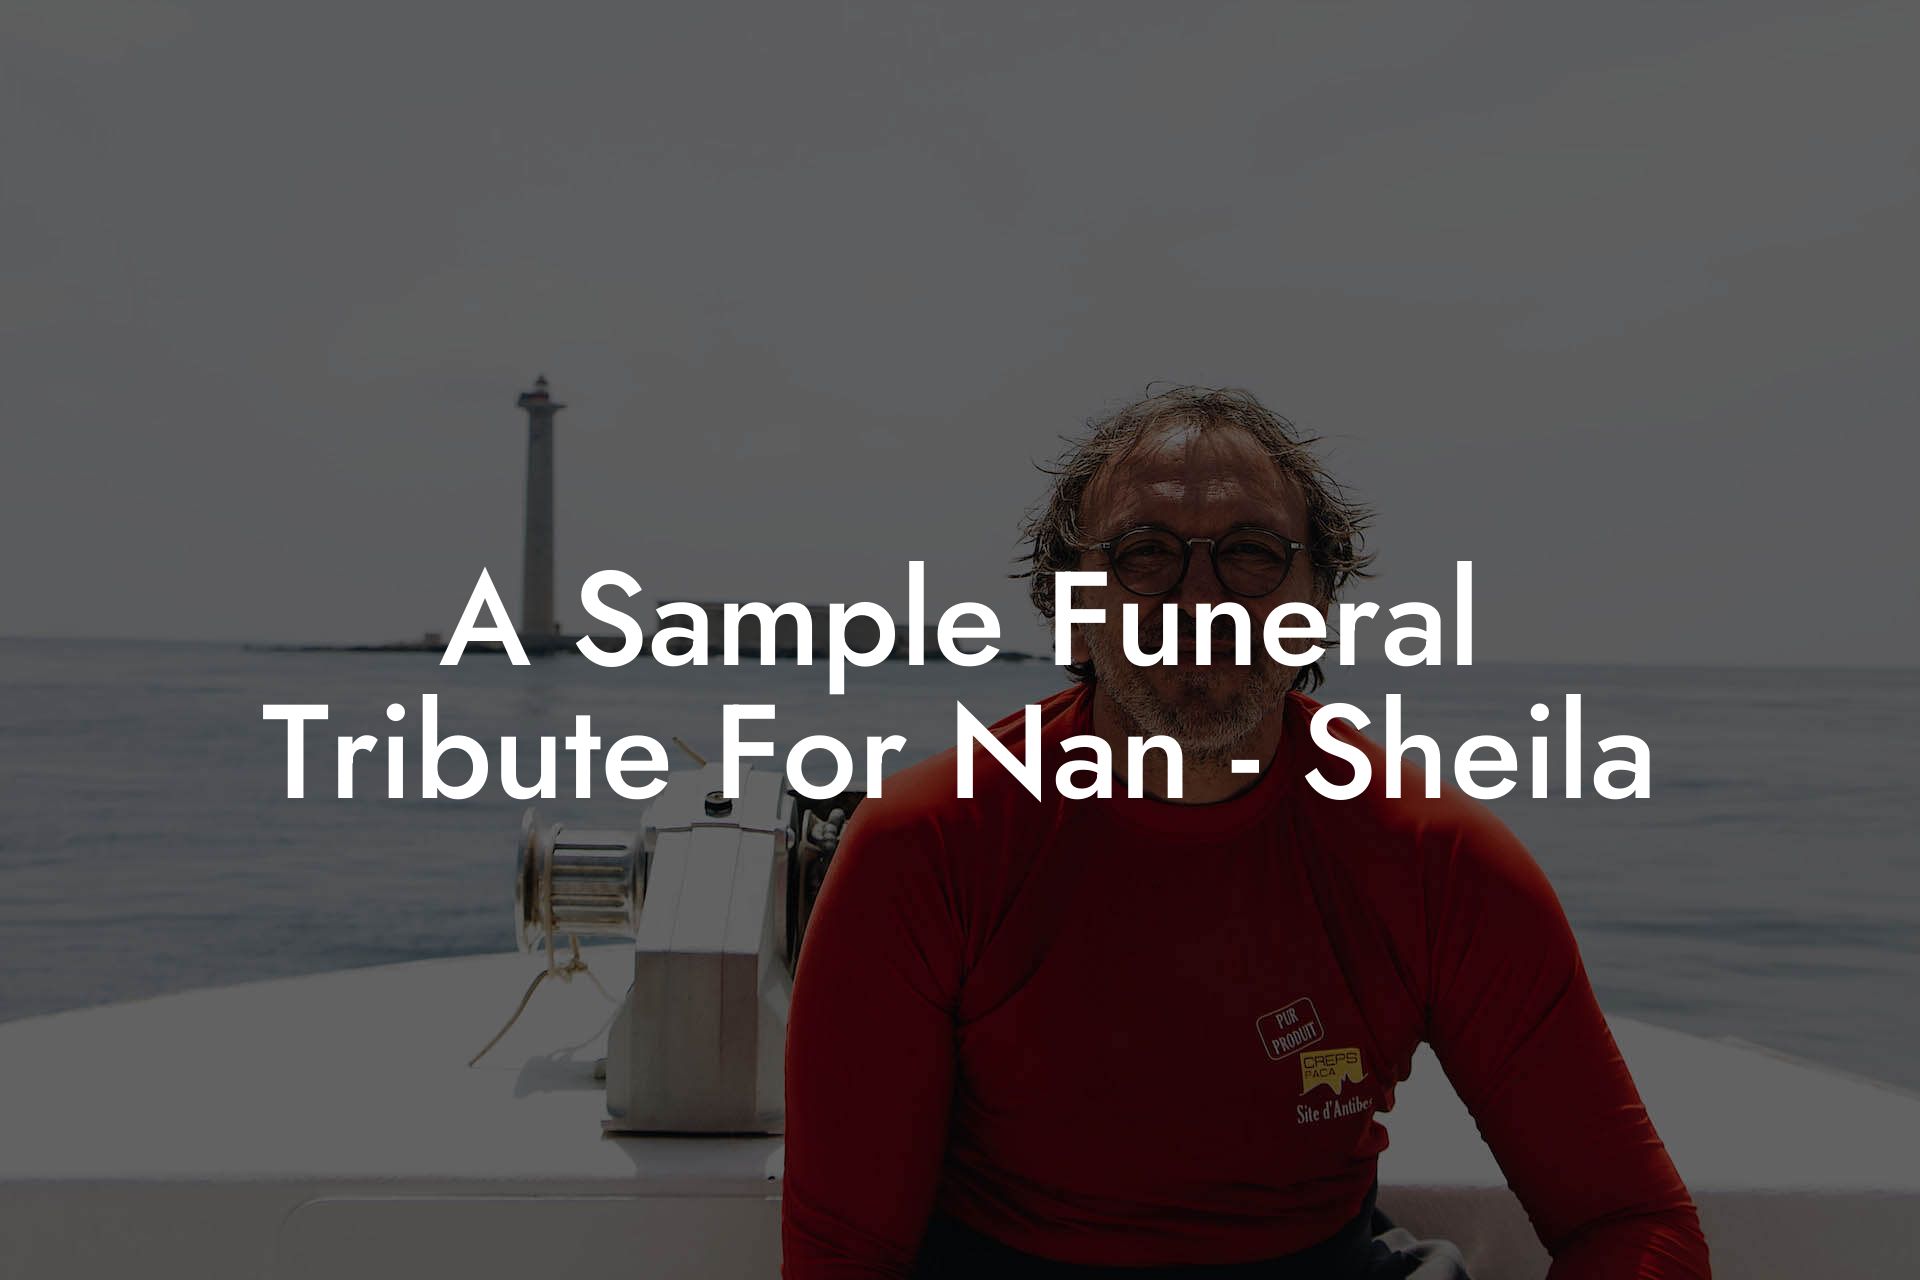 A Sample Funeral Tribute For Nan - Sheila